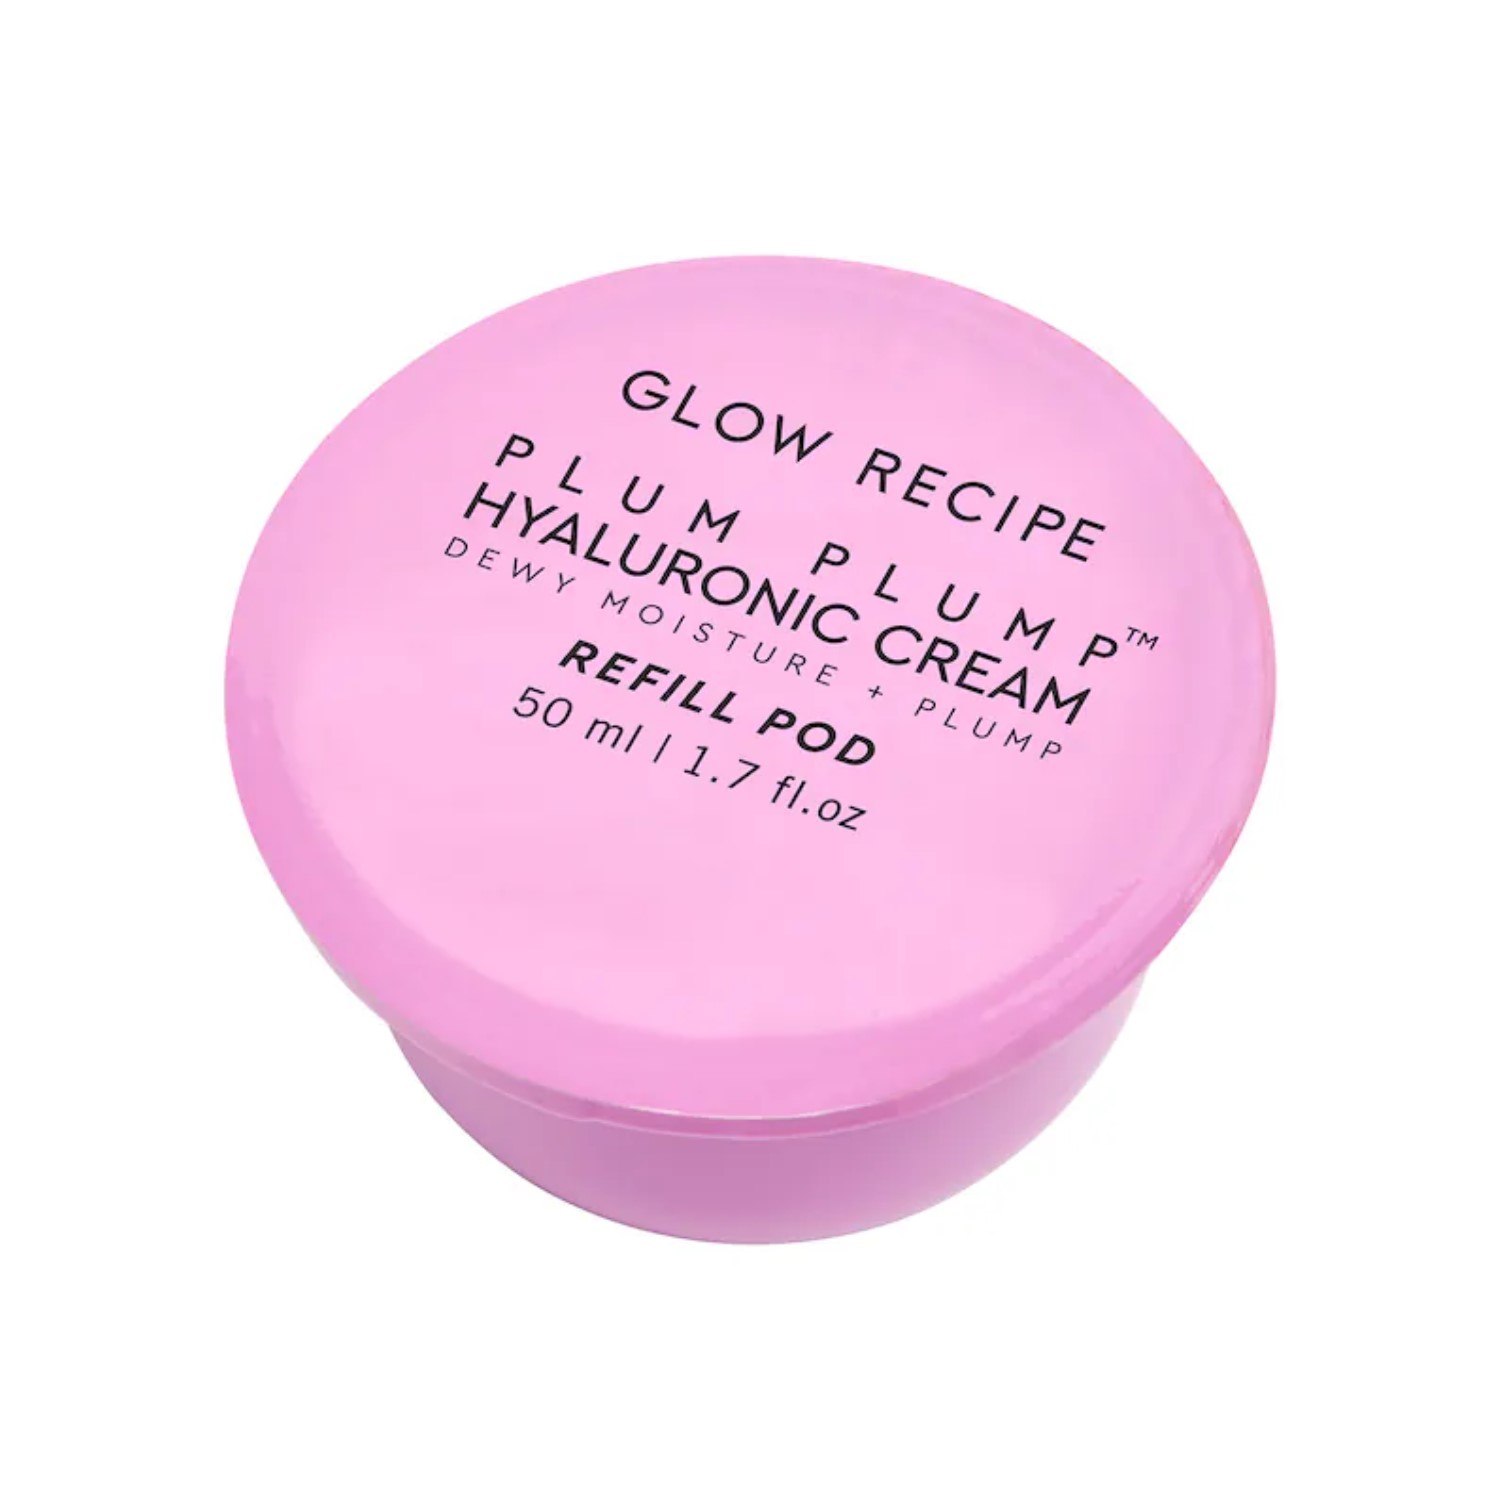 plum plump hyaluronic cream refill pod (refil de crema)